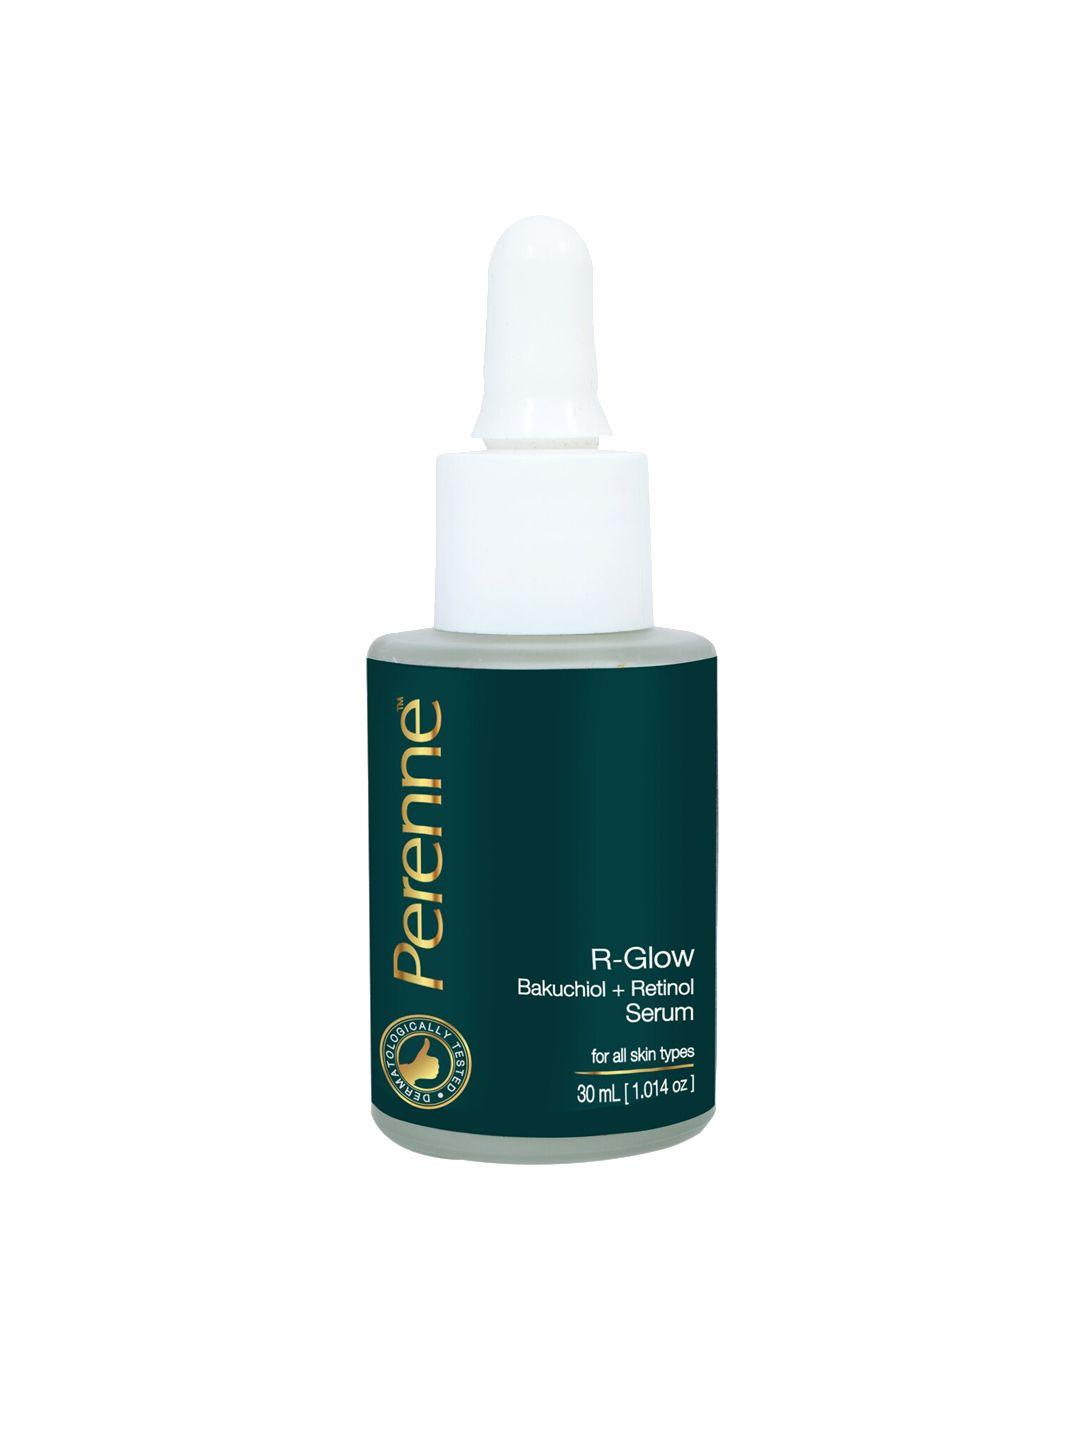 perenne r-glow bakuchiol & retinol face serum for all skin types - 30 ml